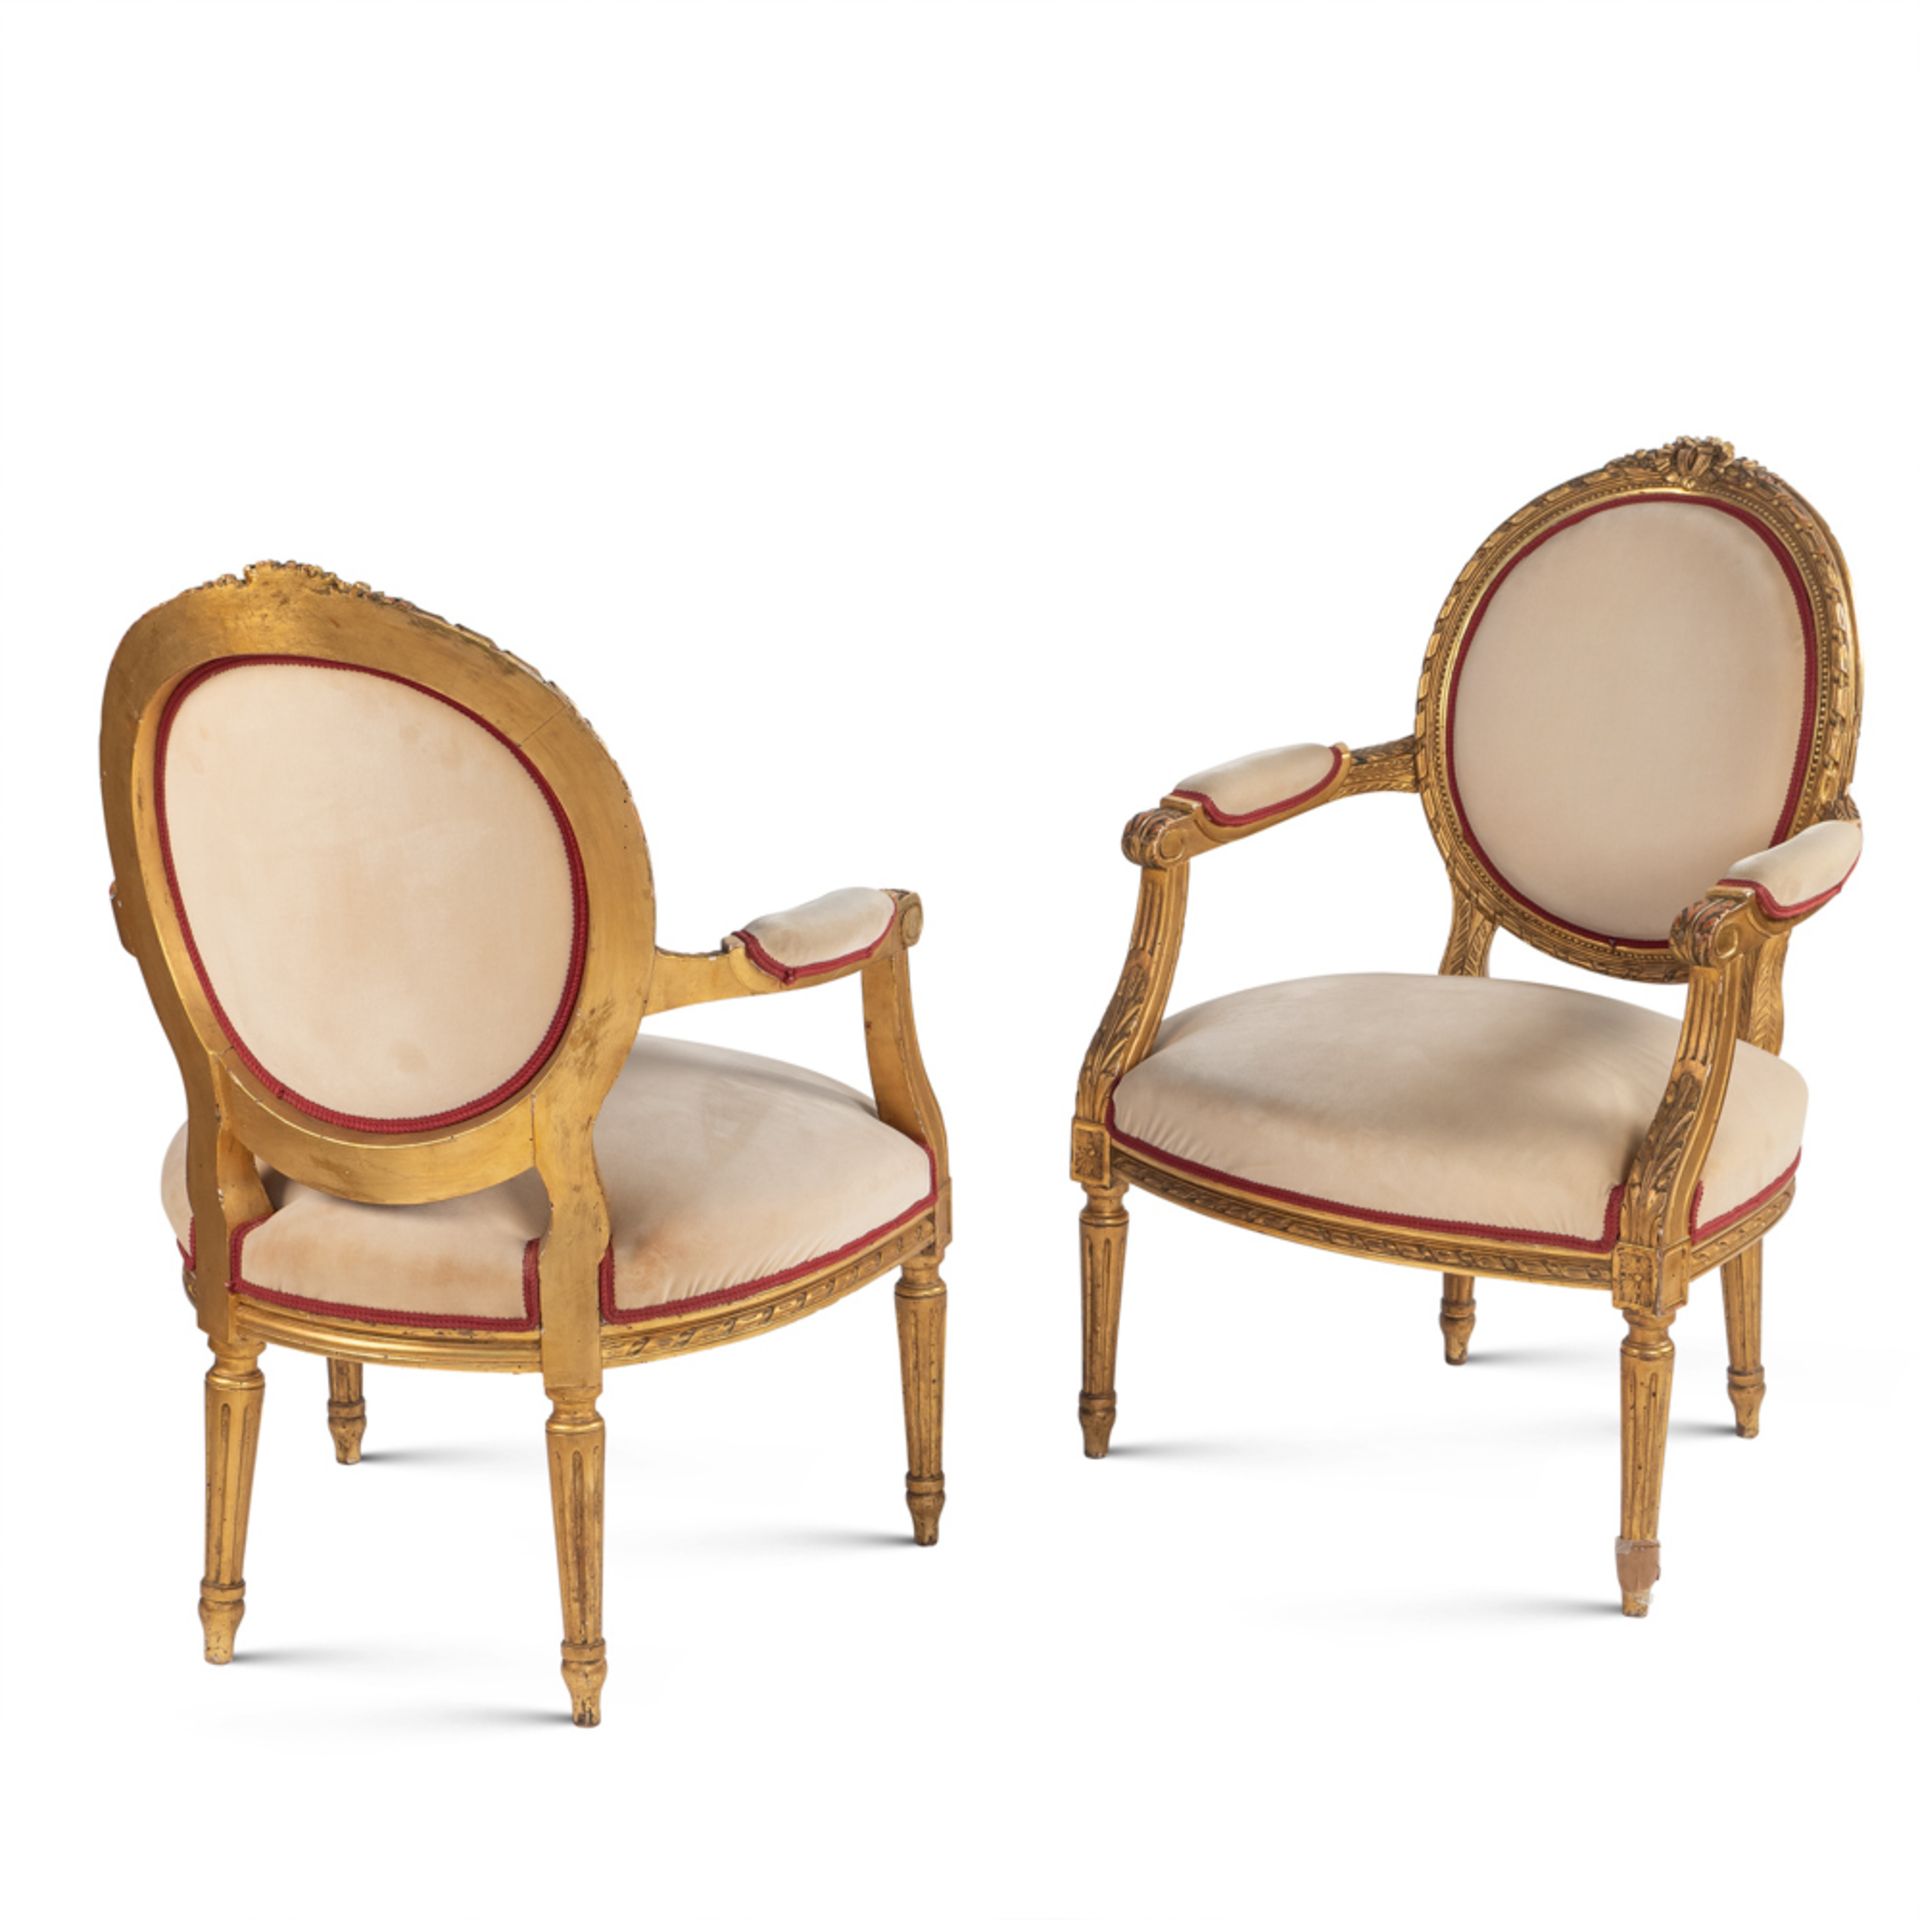 Pair of gilt wood armchairs France, 19th-20th century 83x63x56 cm.